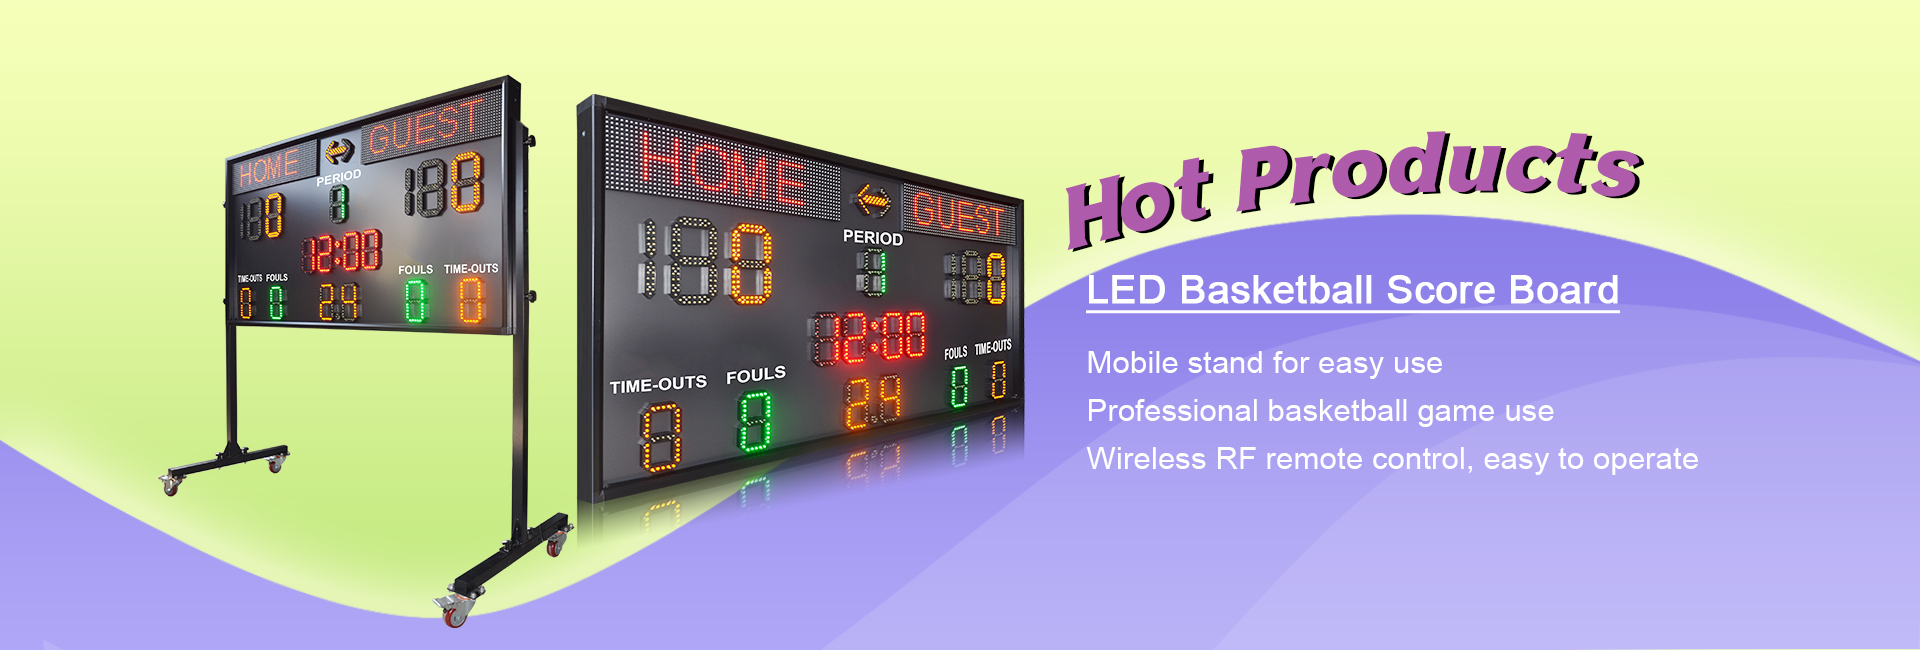 led basketball scoreboard